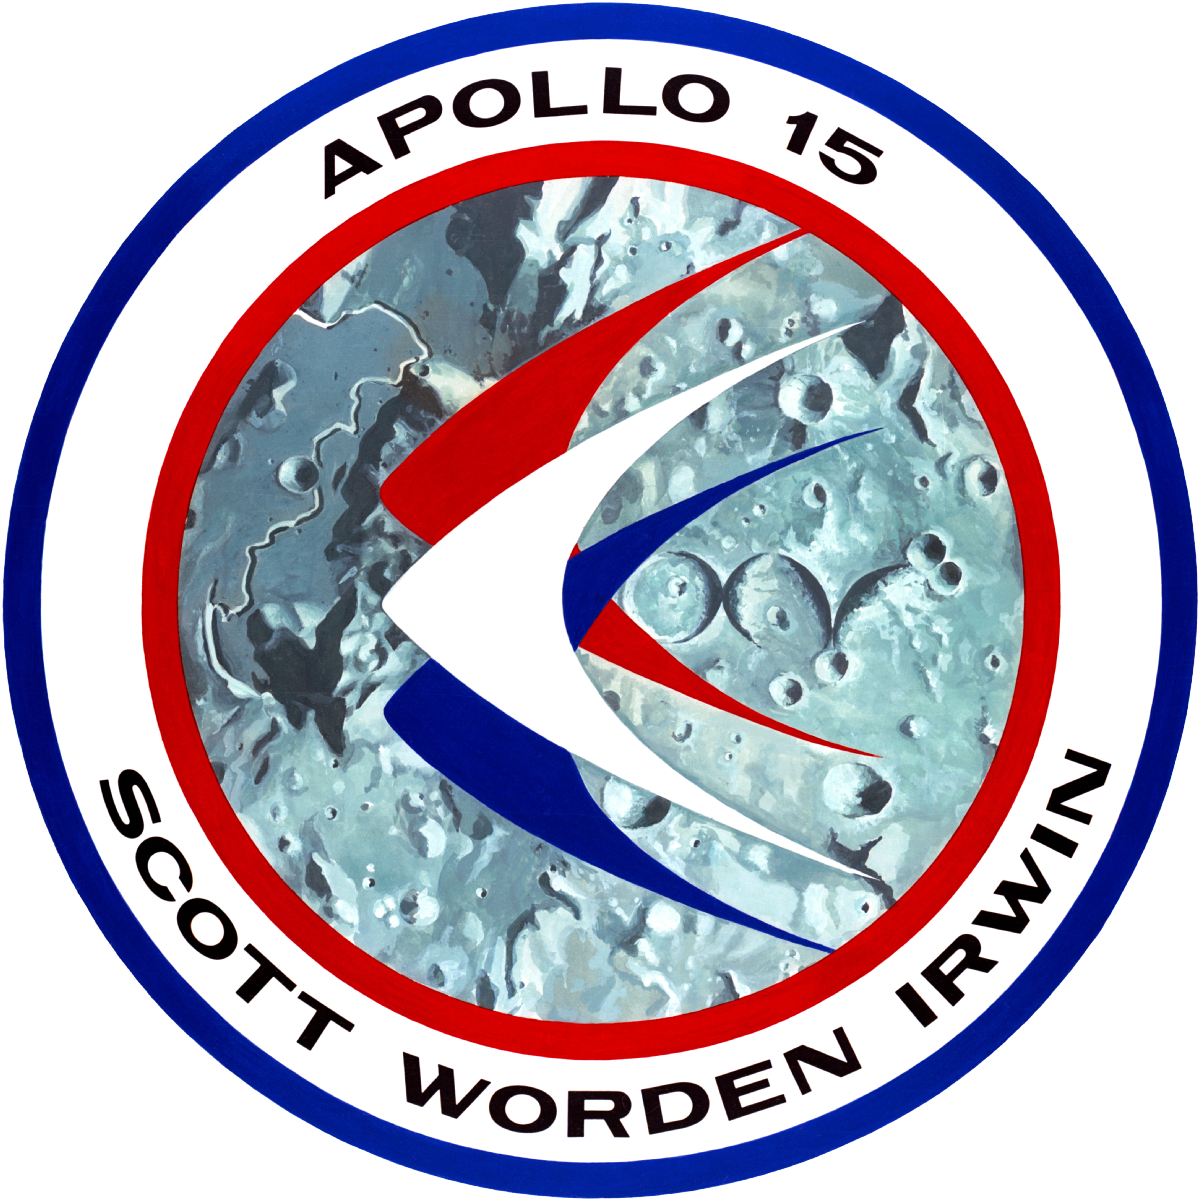 Apolo 15 - Wikipedia, la enciclopedia libre